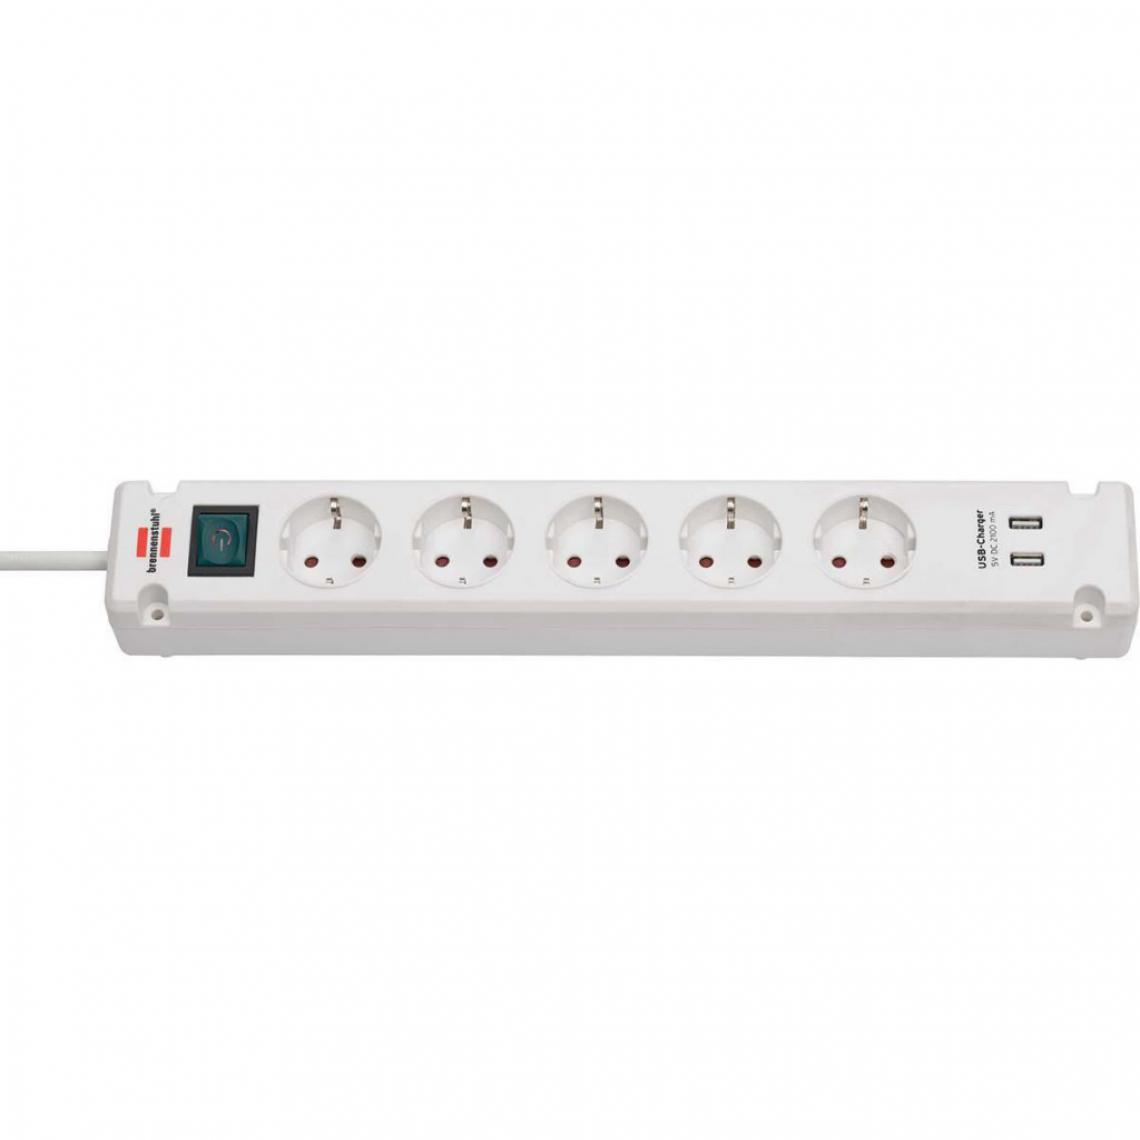 Alpexe - Brennenstuhl Bremounta Extension Socket 5-way 2x USB white 3m H05VV-F 3G1.5 - Blocs multiprises